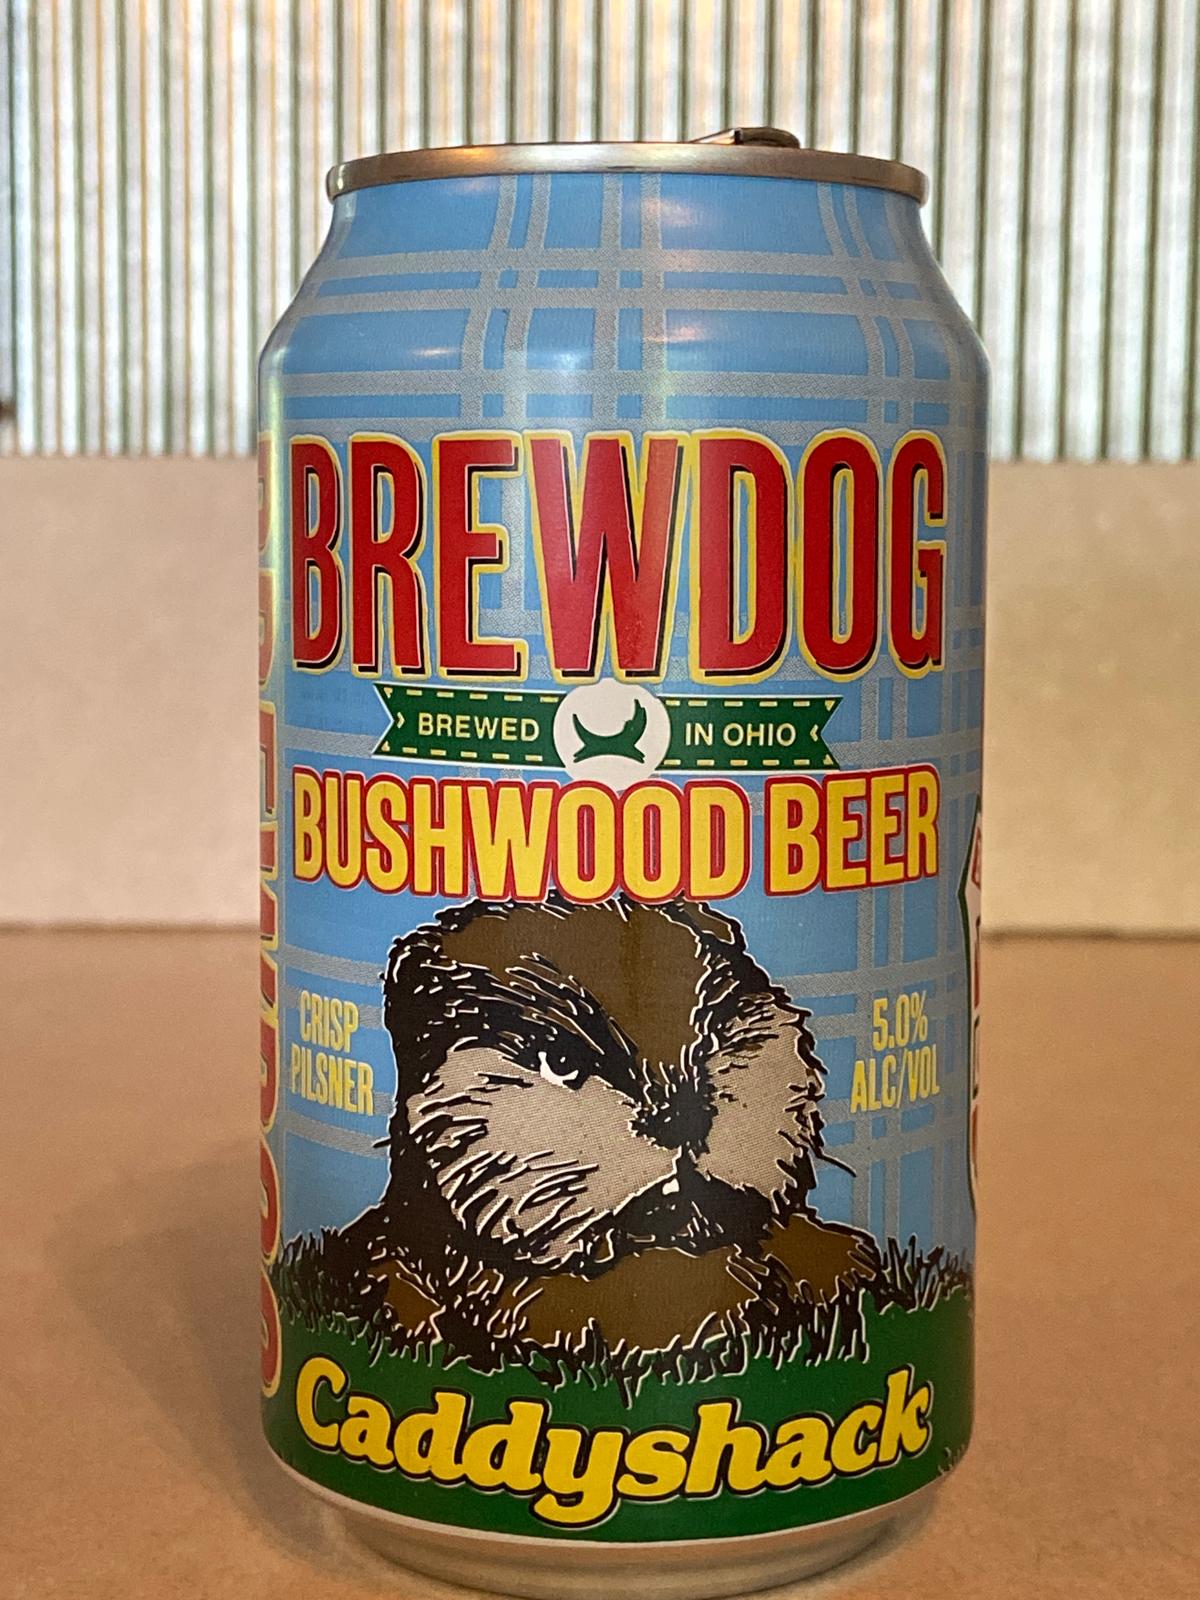 Bushwood Beer